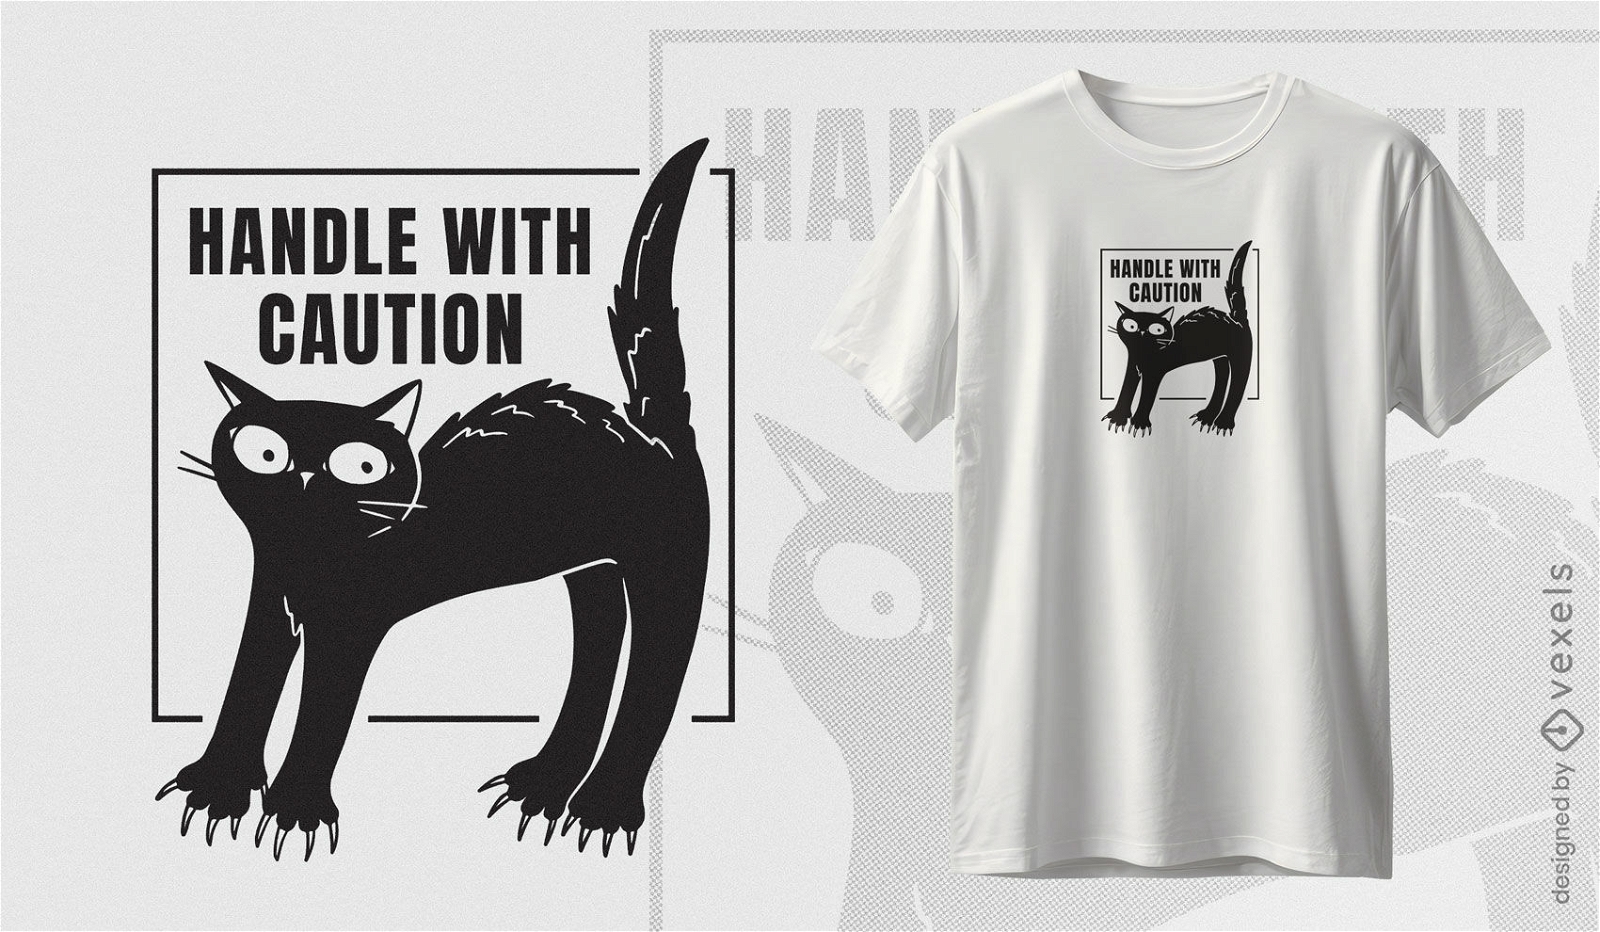 Handle with caution cat t-shirt design